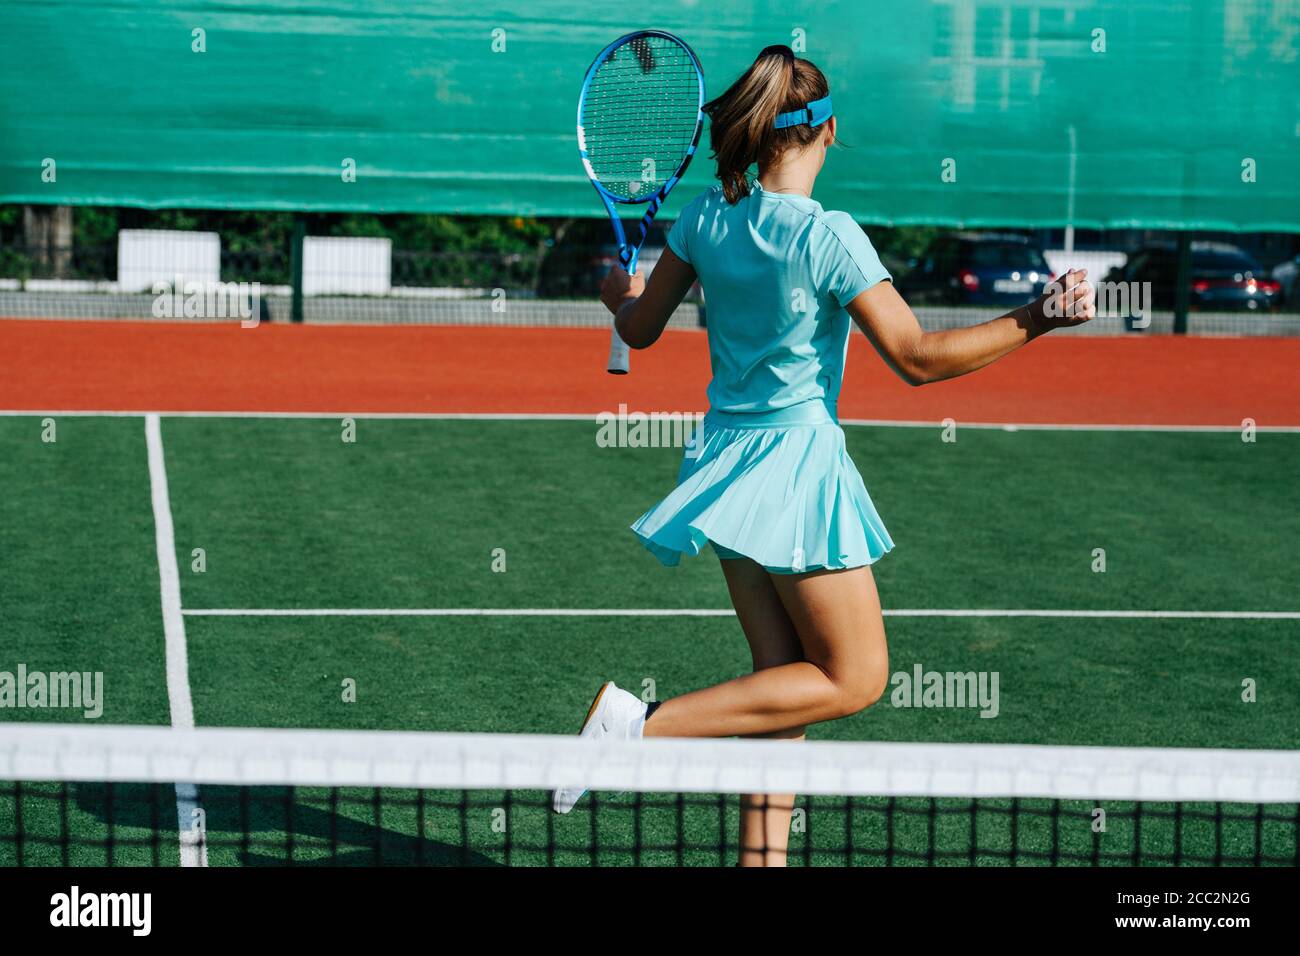 Carefree girl messing around, dancing on tennis court, taking a break Stock Photo